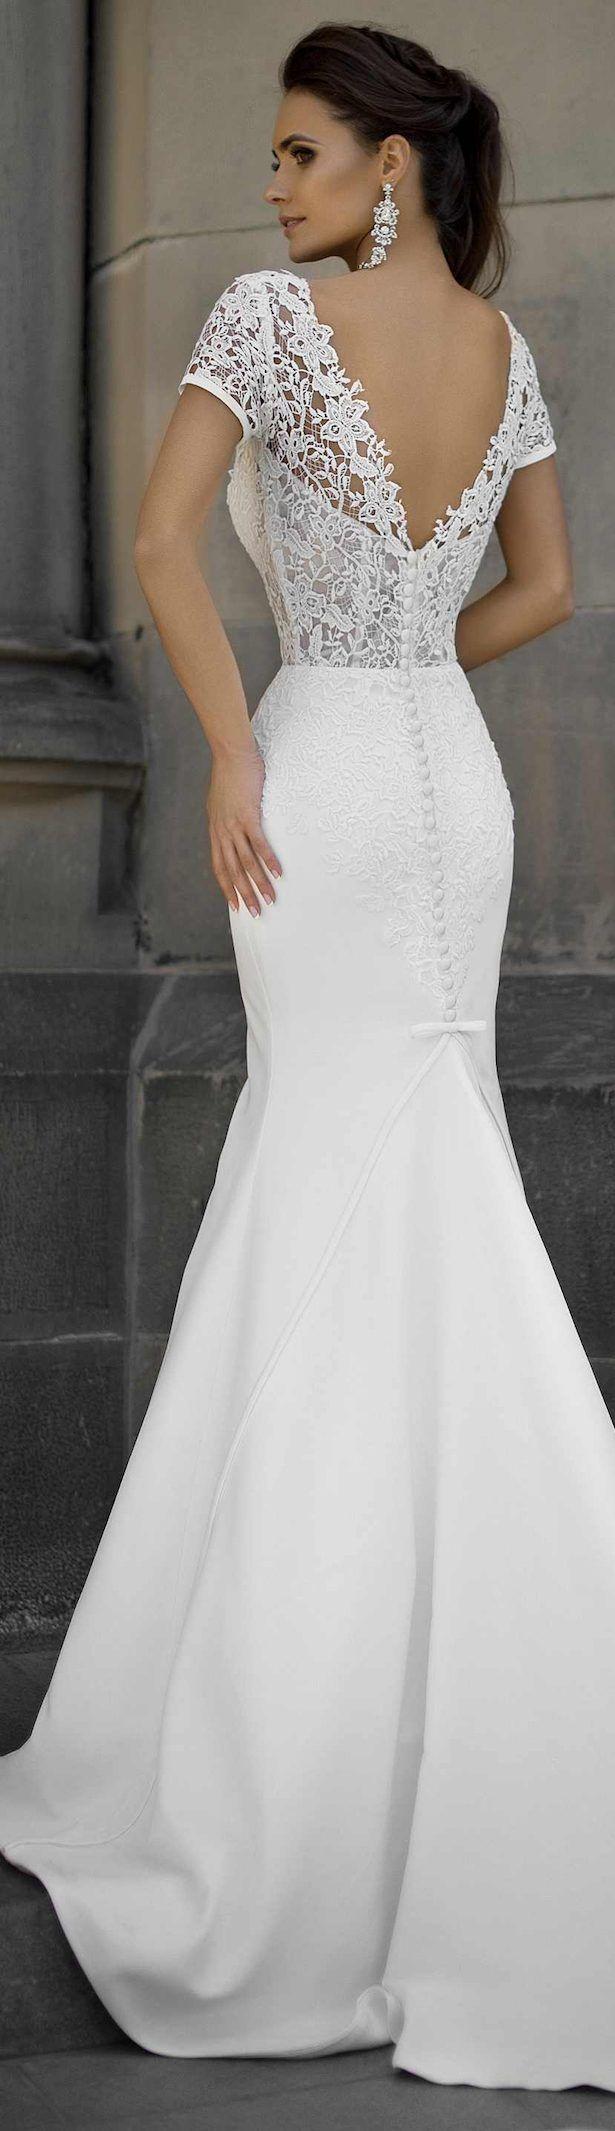 Dress - Milla Nova 2016 Bridal Collection #2793356 - Weddbook